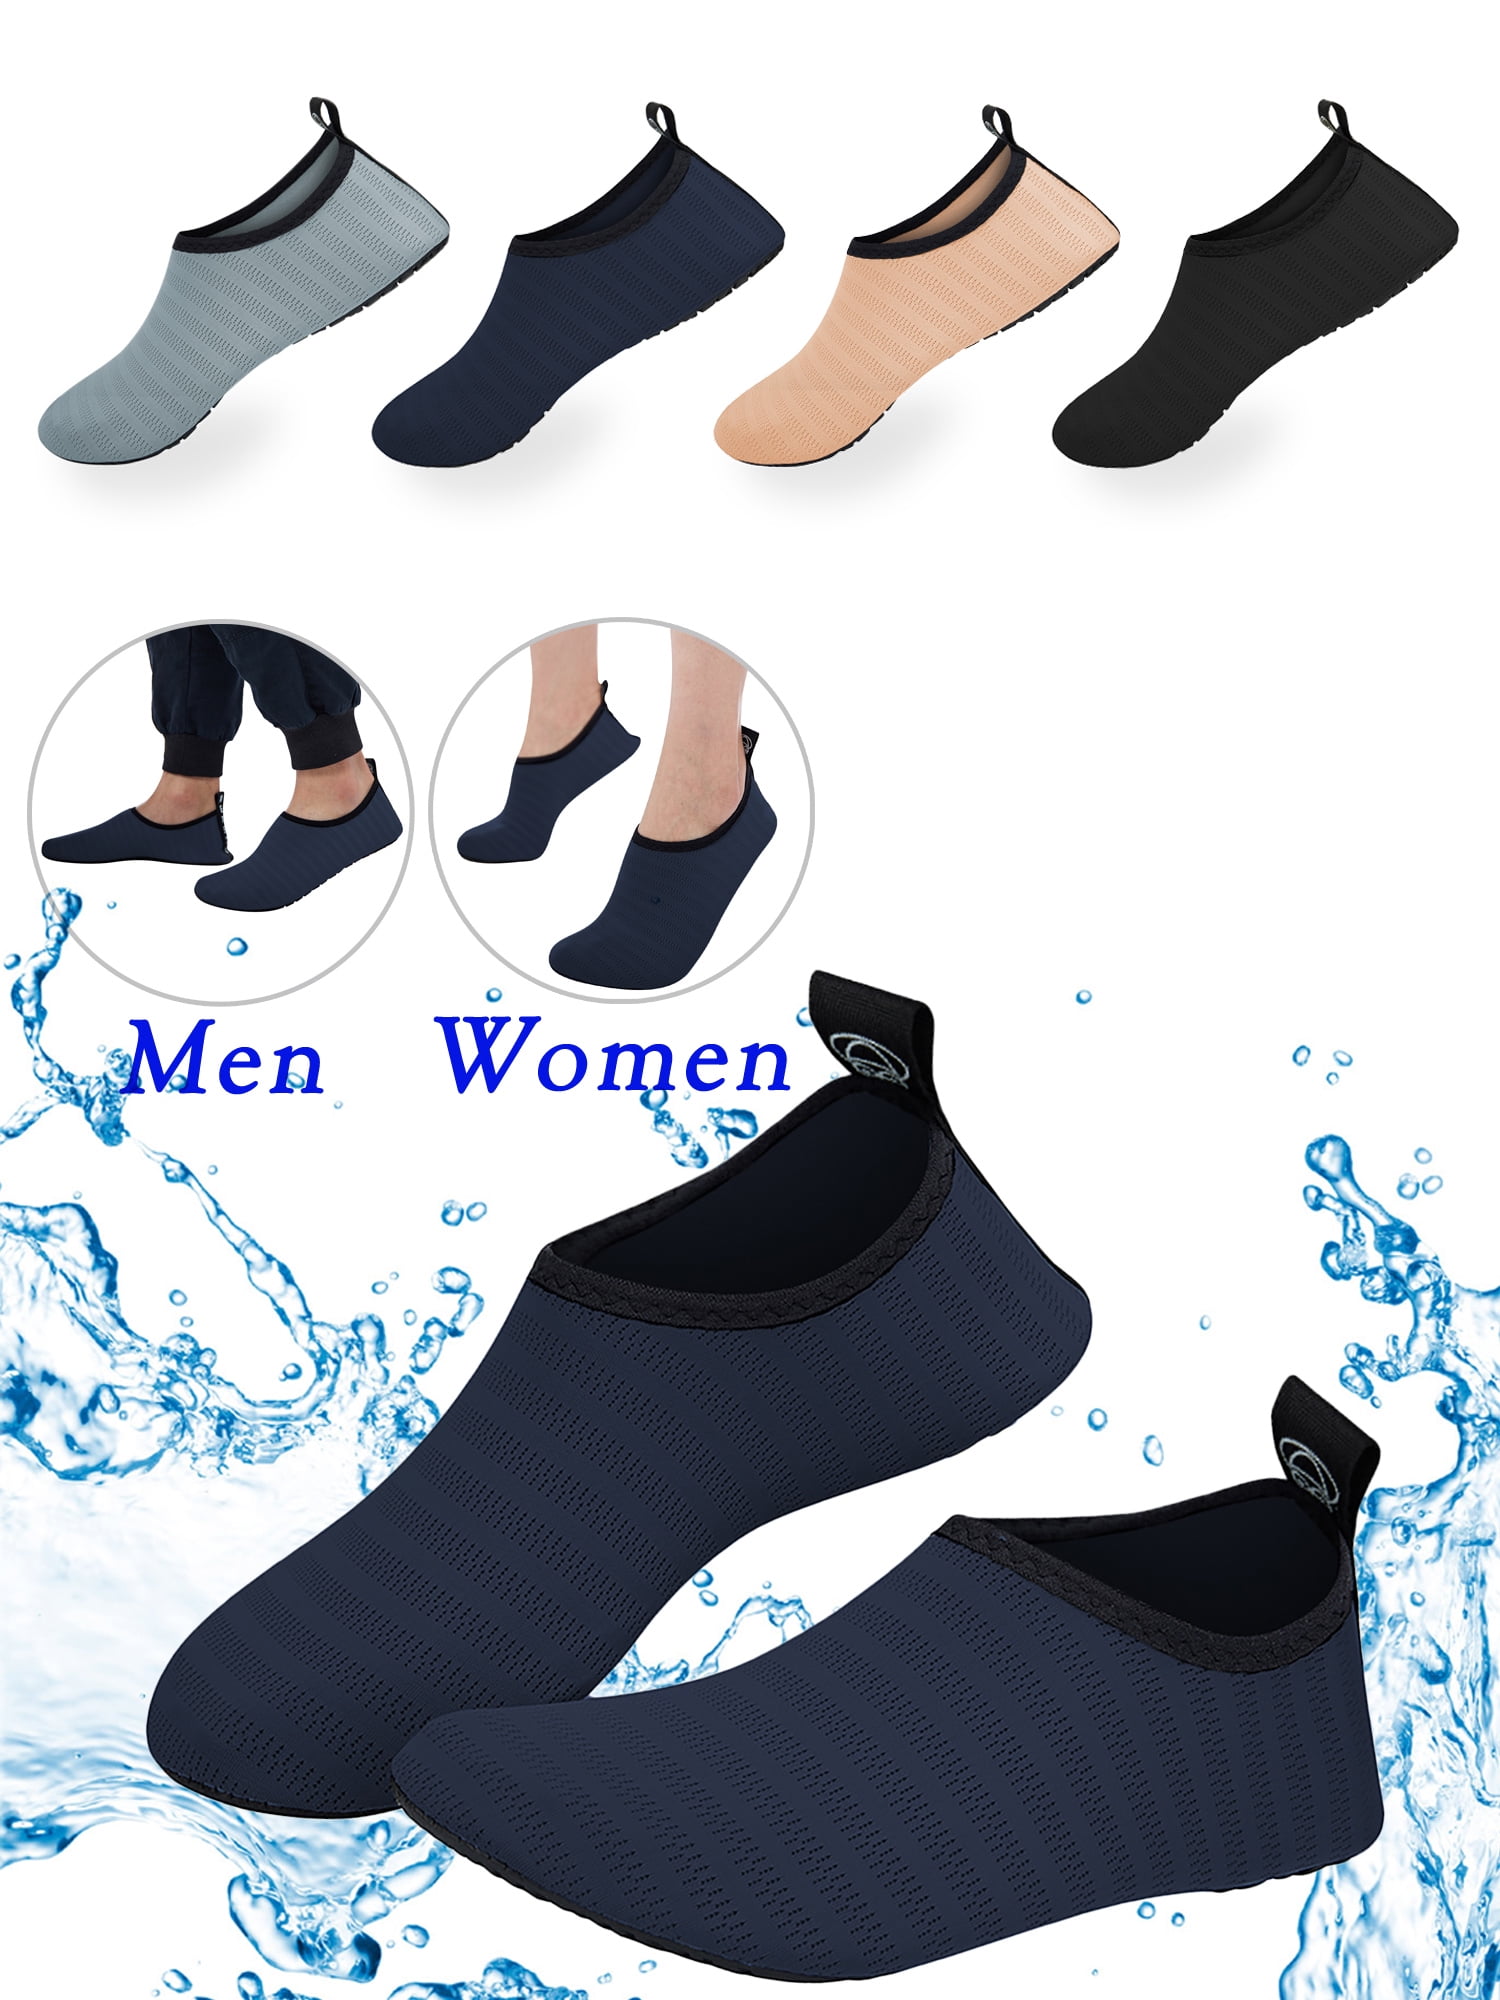 Men Women Skin Water Shoes Aqua Beach Yoga Exercise Pool Swim Slip On Socks New 